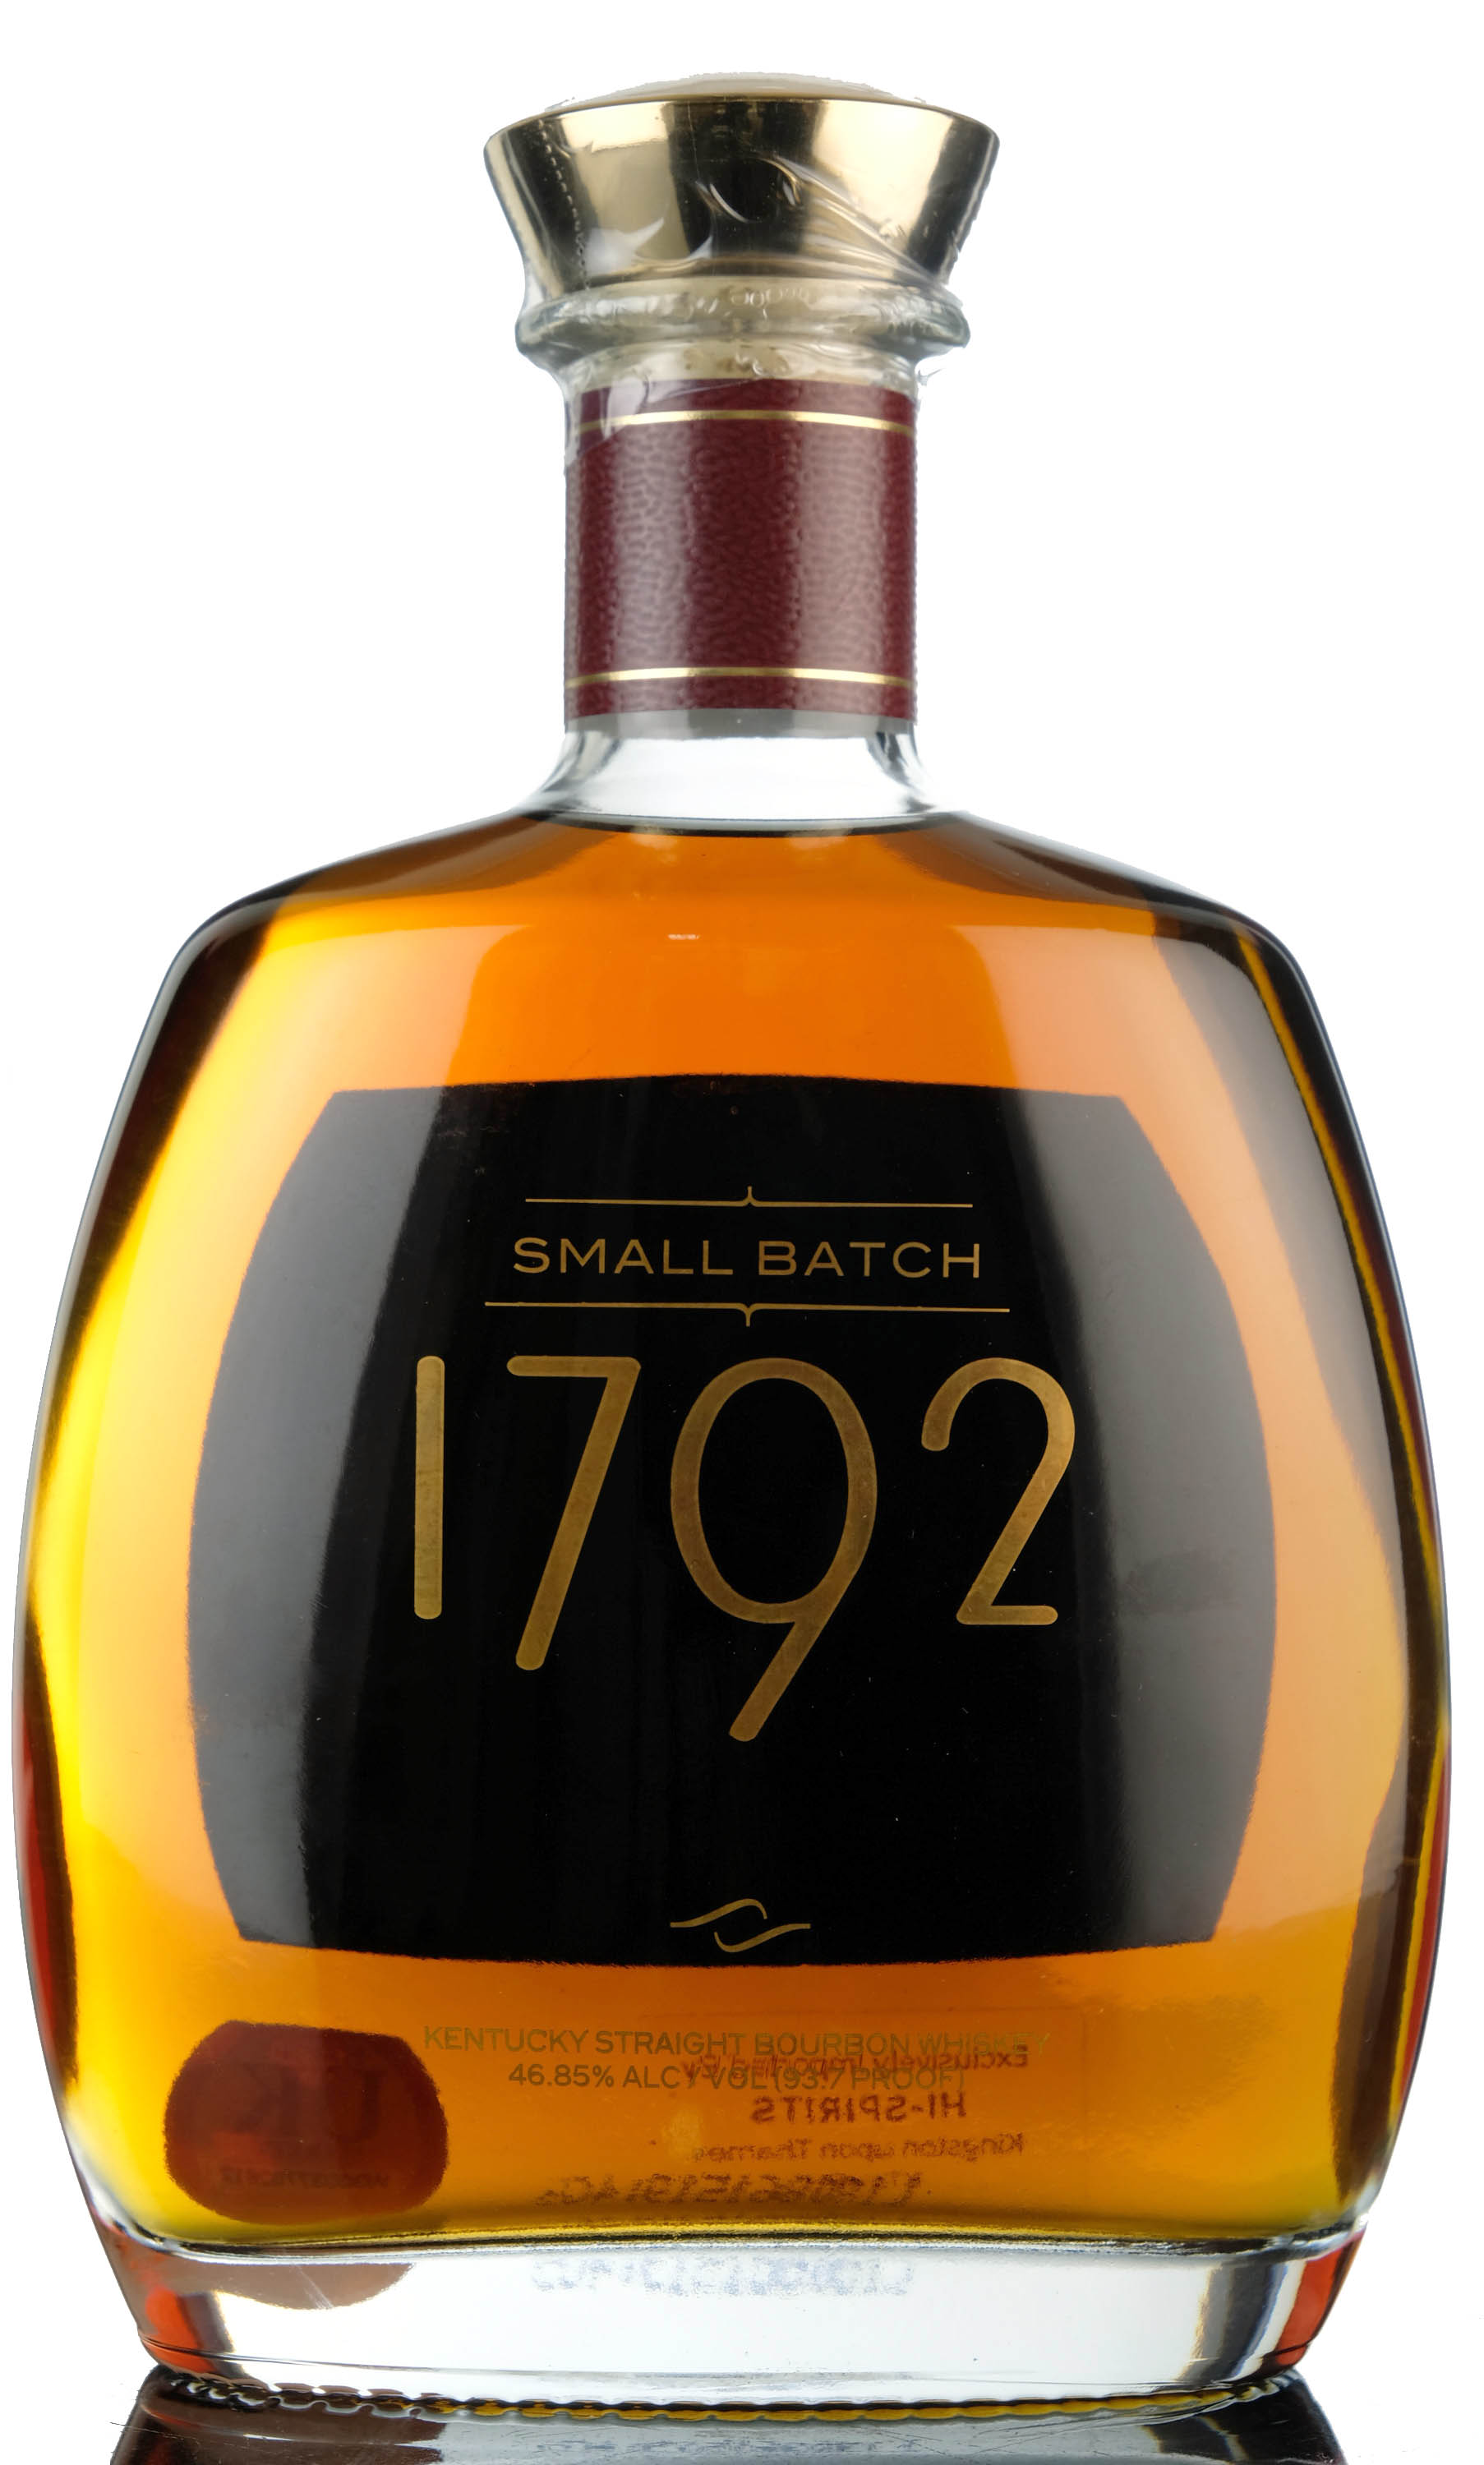 1792 Small Batch Bourbon - 46.85%